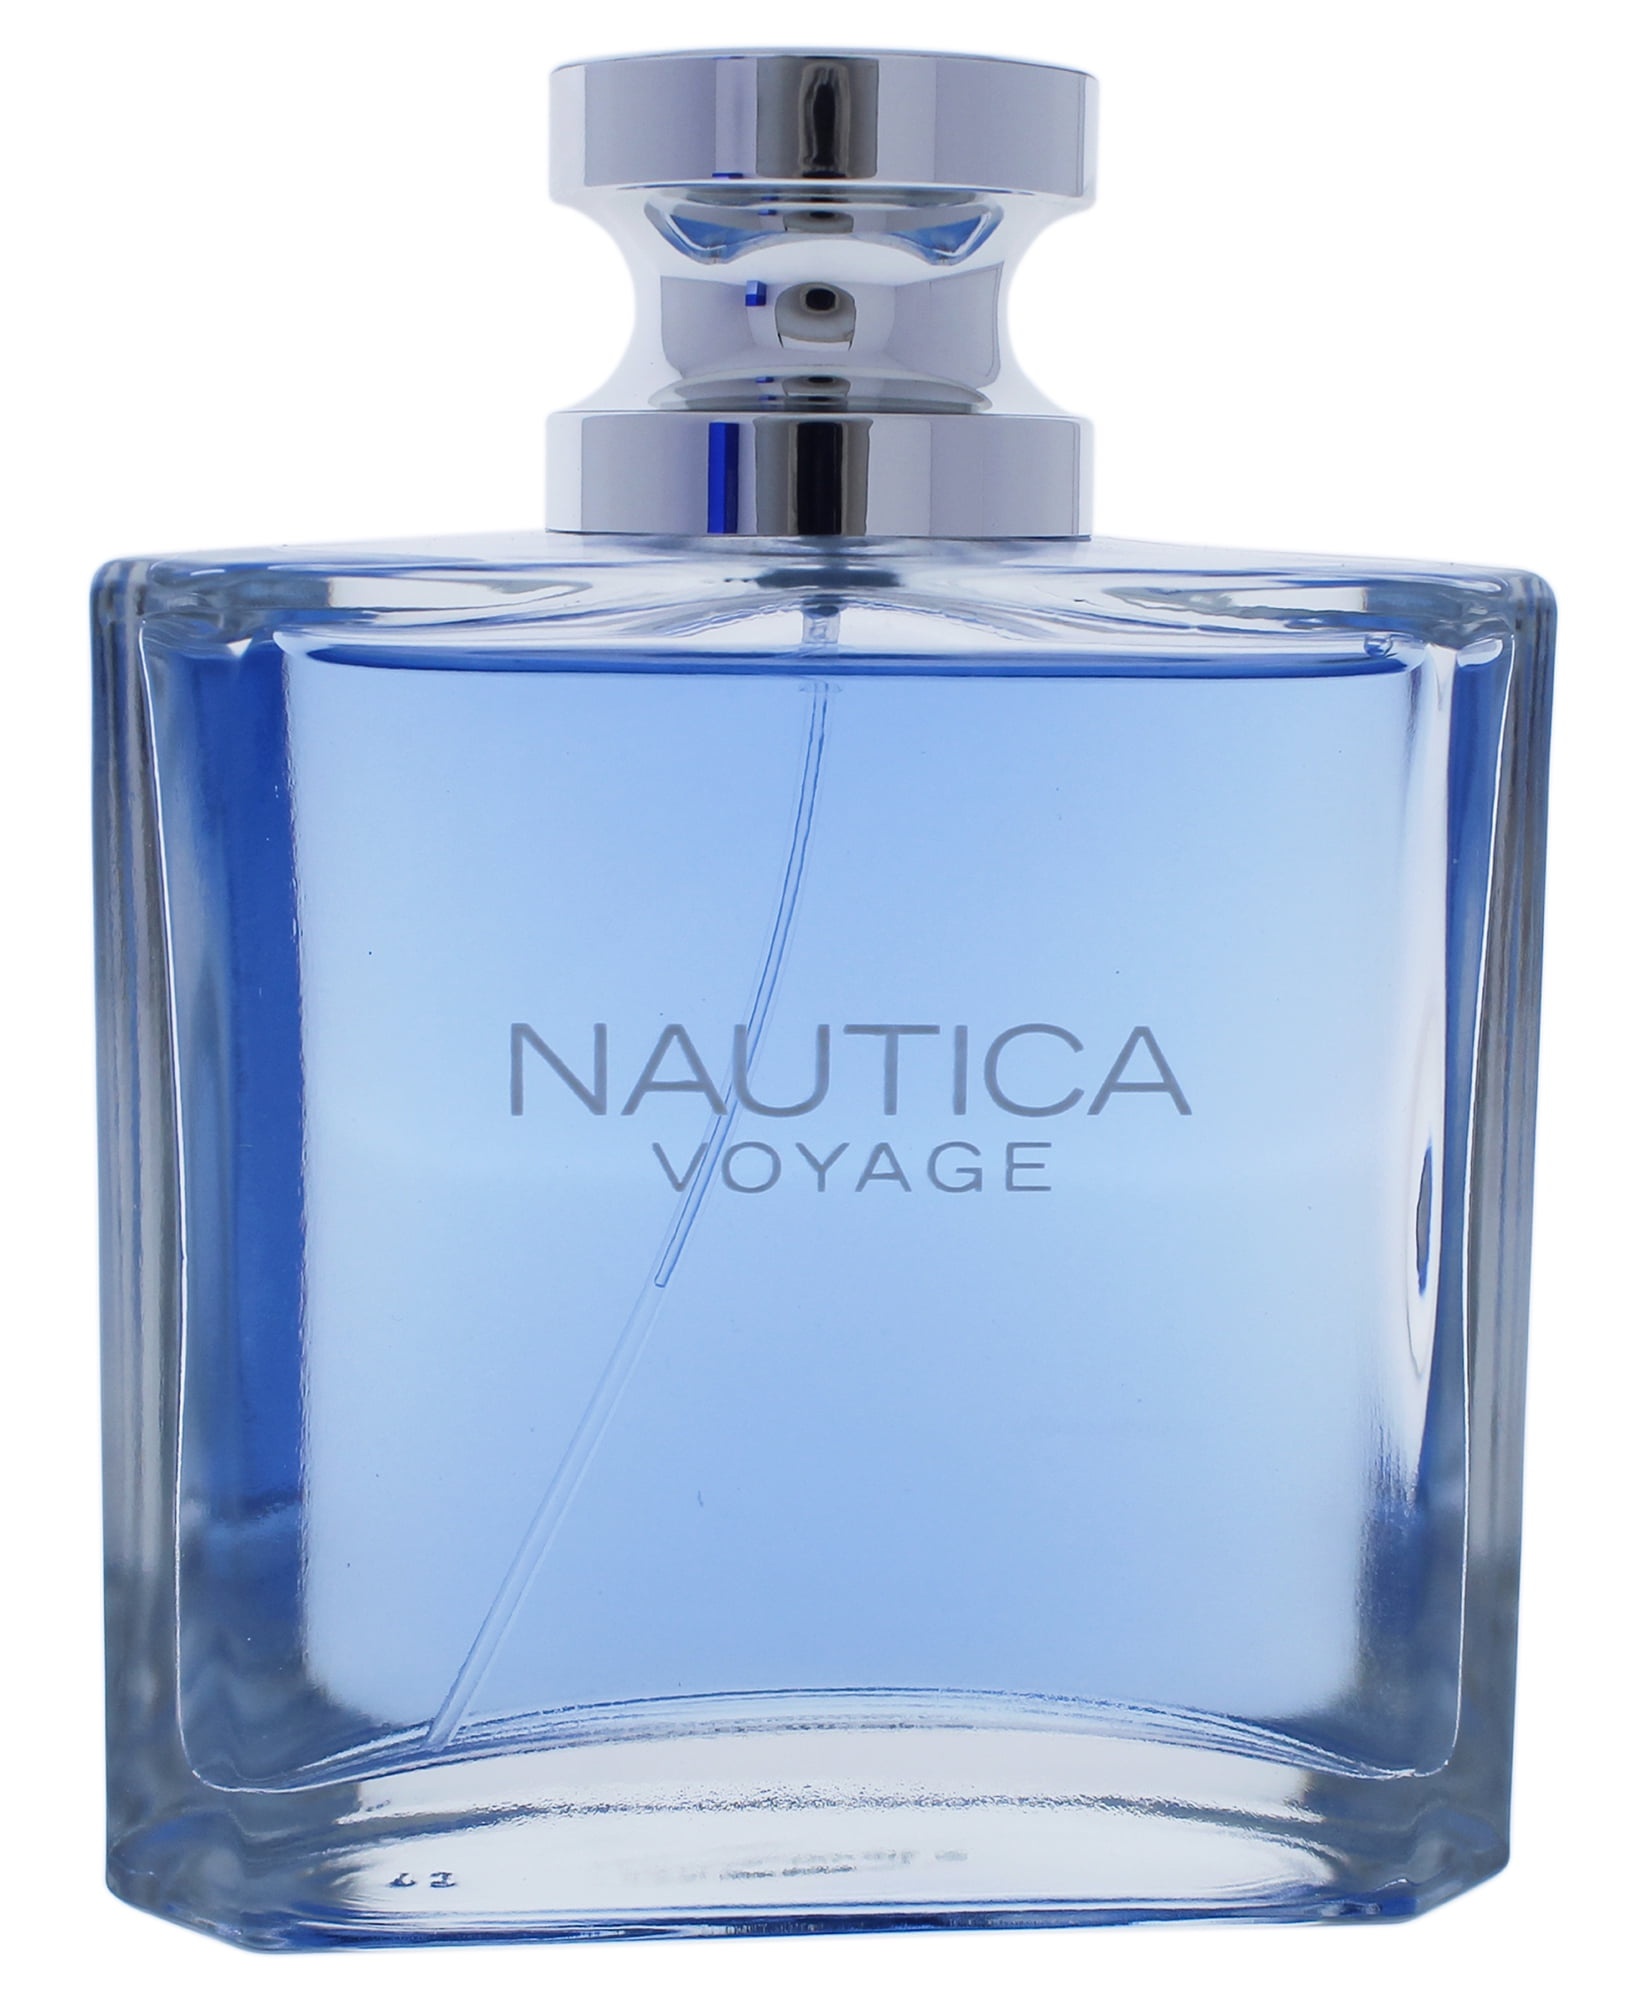 nautica Voyage